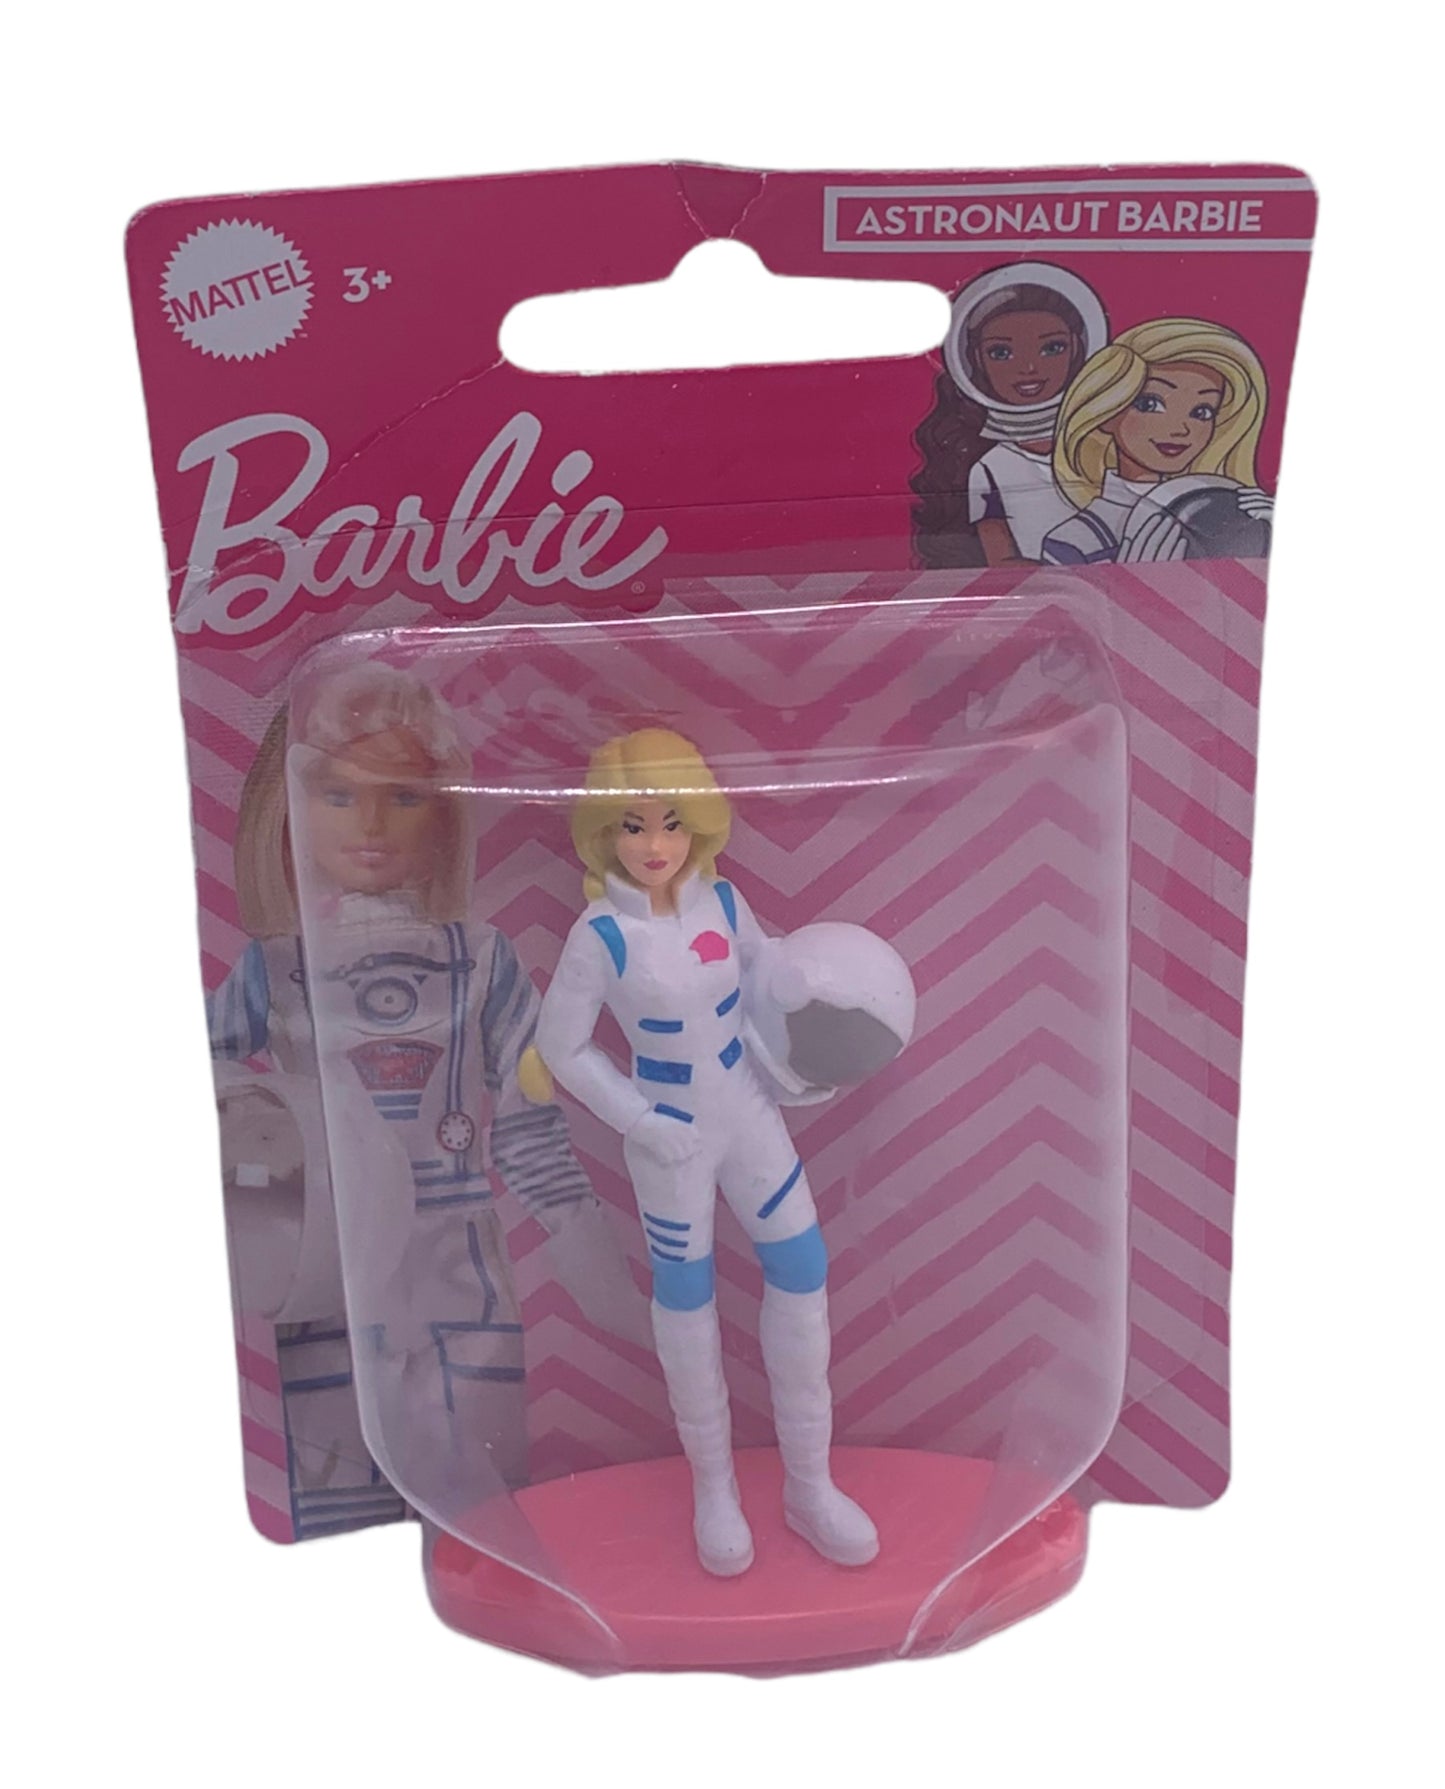 Mattel Micro Barbie Astronaut 3" Figure / Cake Topper Astro Girl